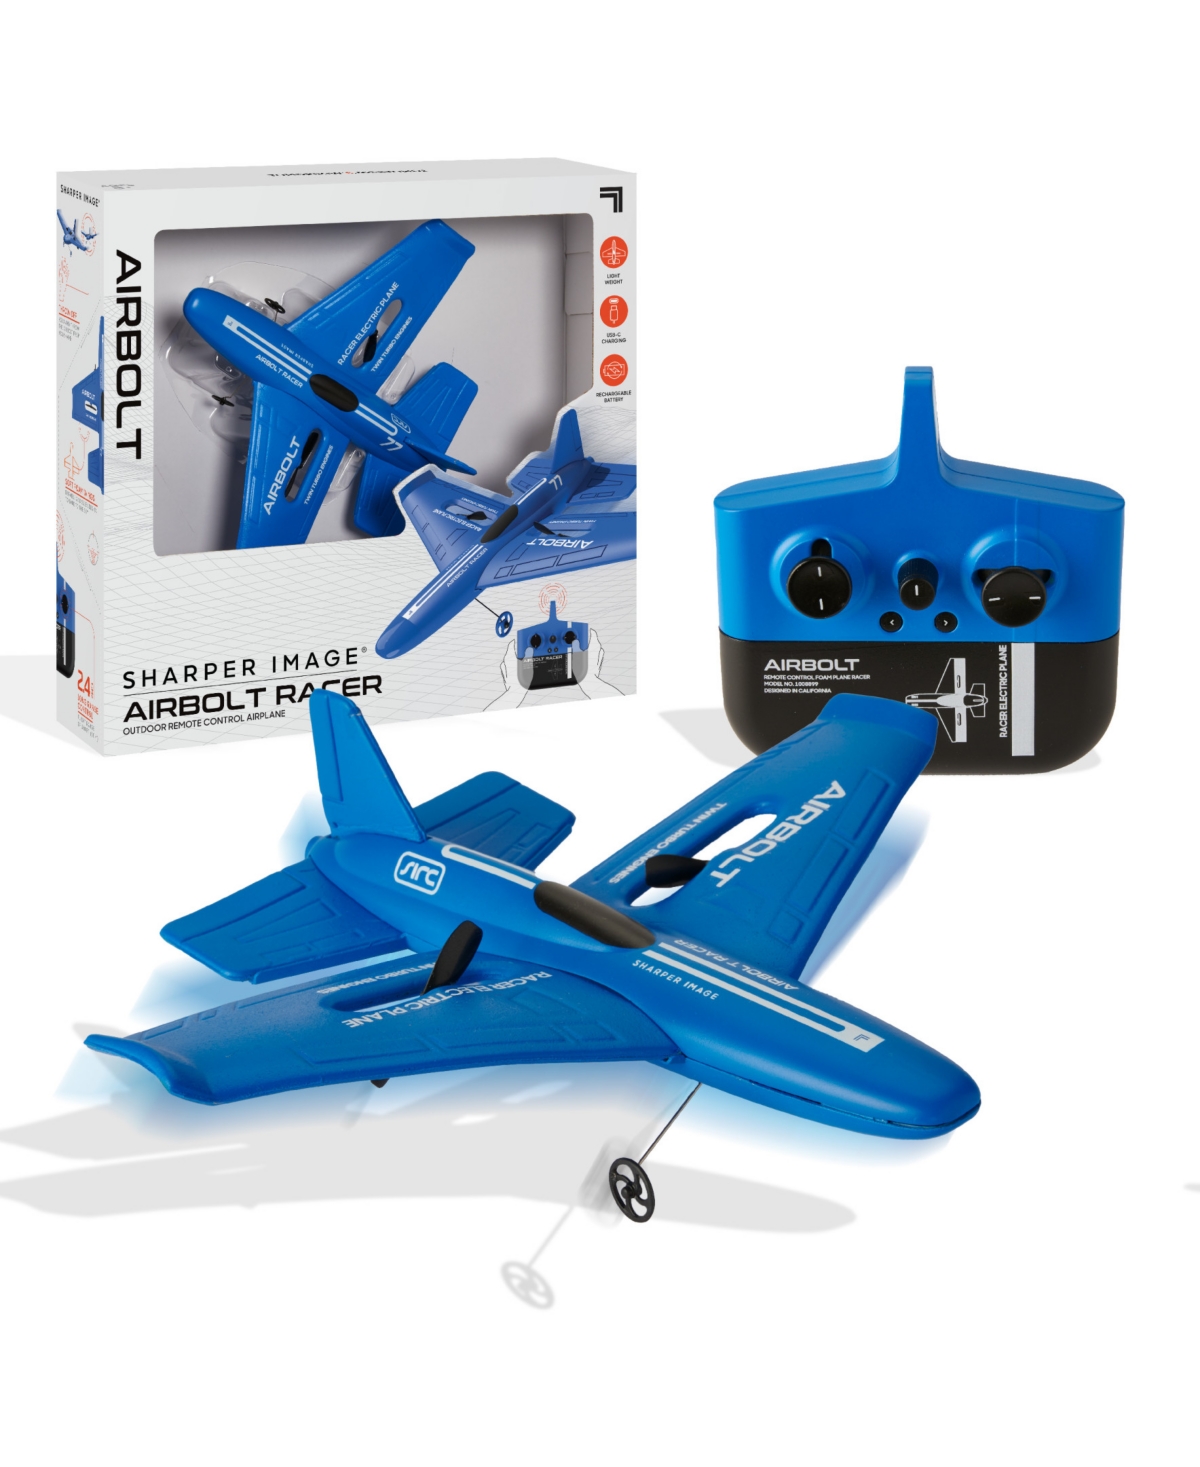 Sharper Image Air Bolt Racer Rc Airplane Set, 7 Piece In Blue